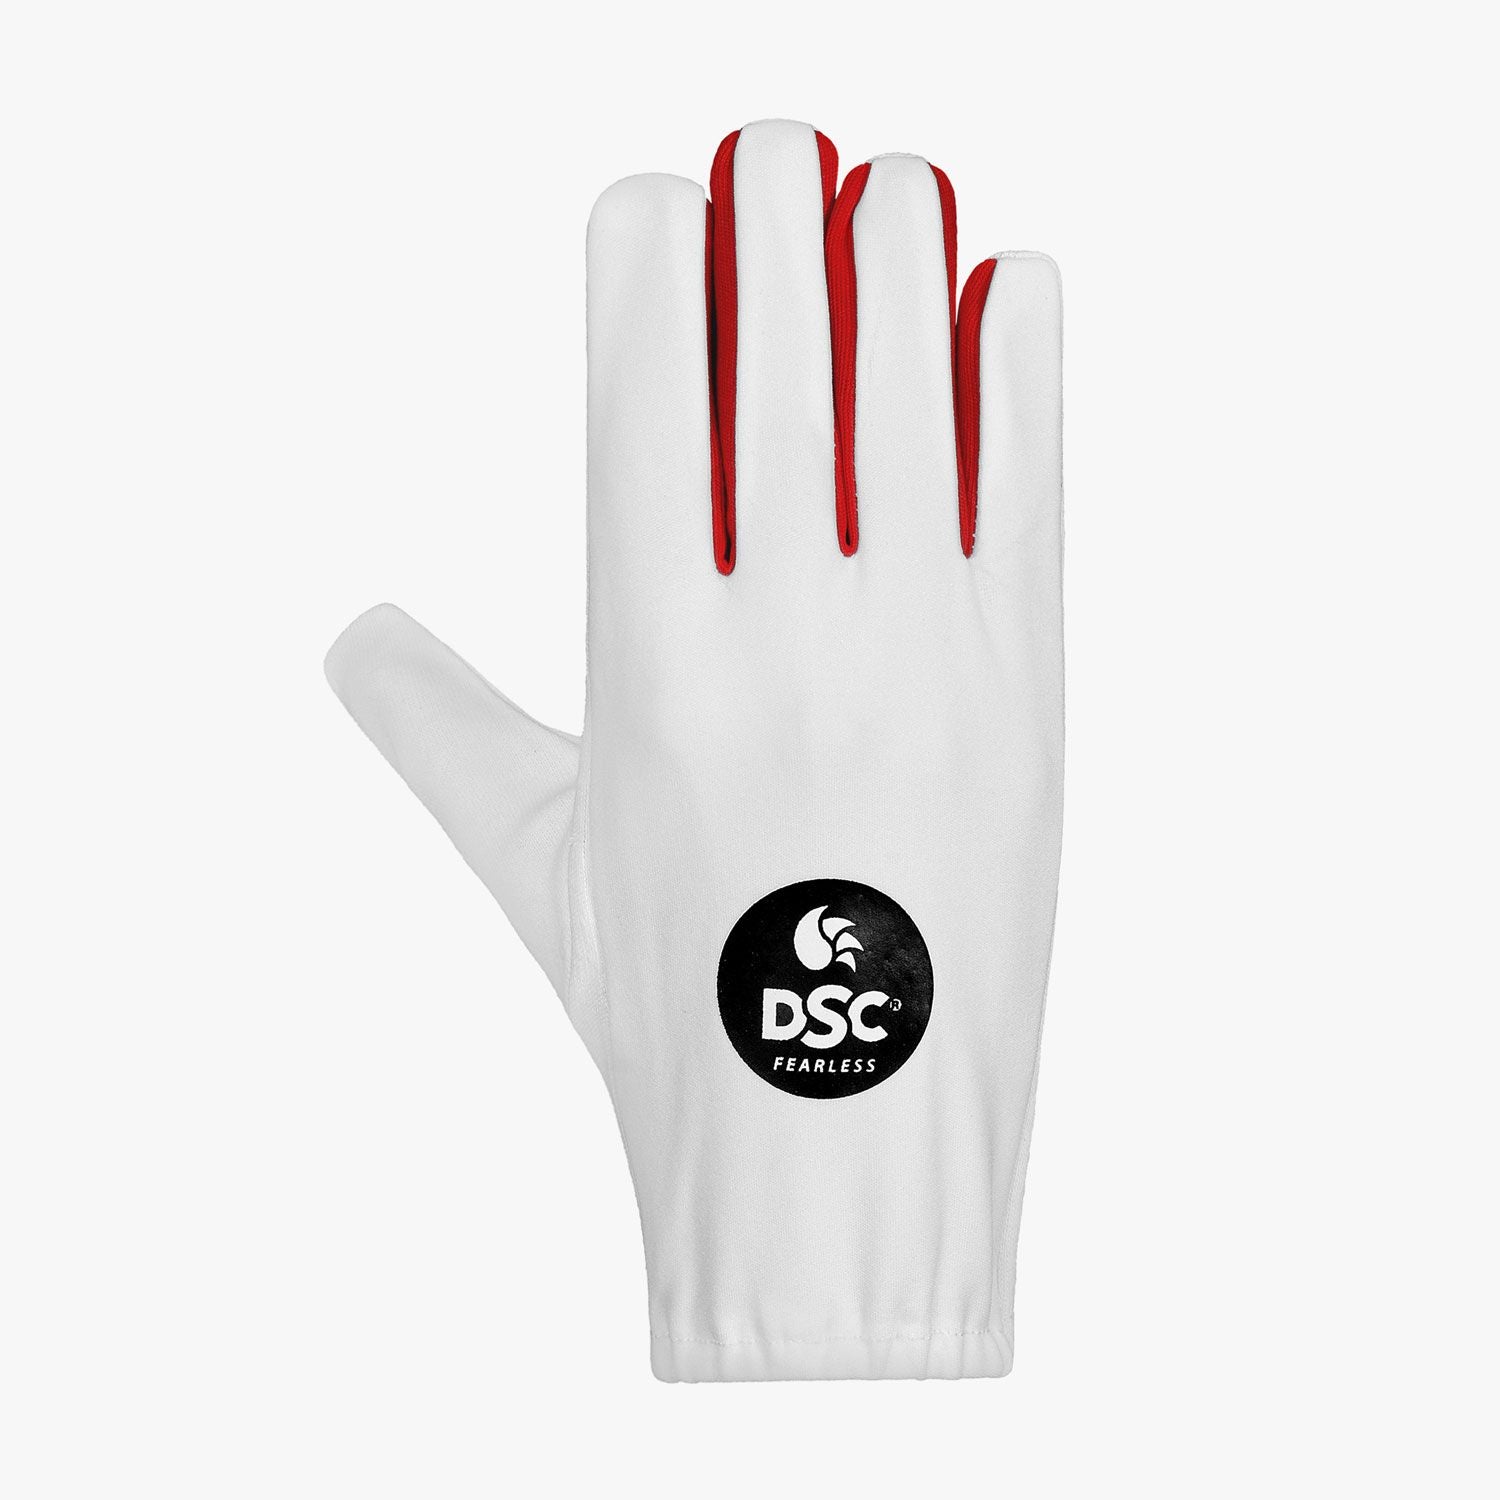 DSC Cricket Glider Inner Batting Gloves